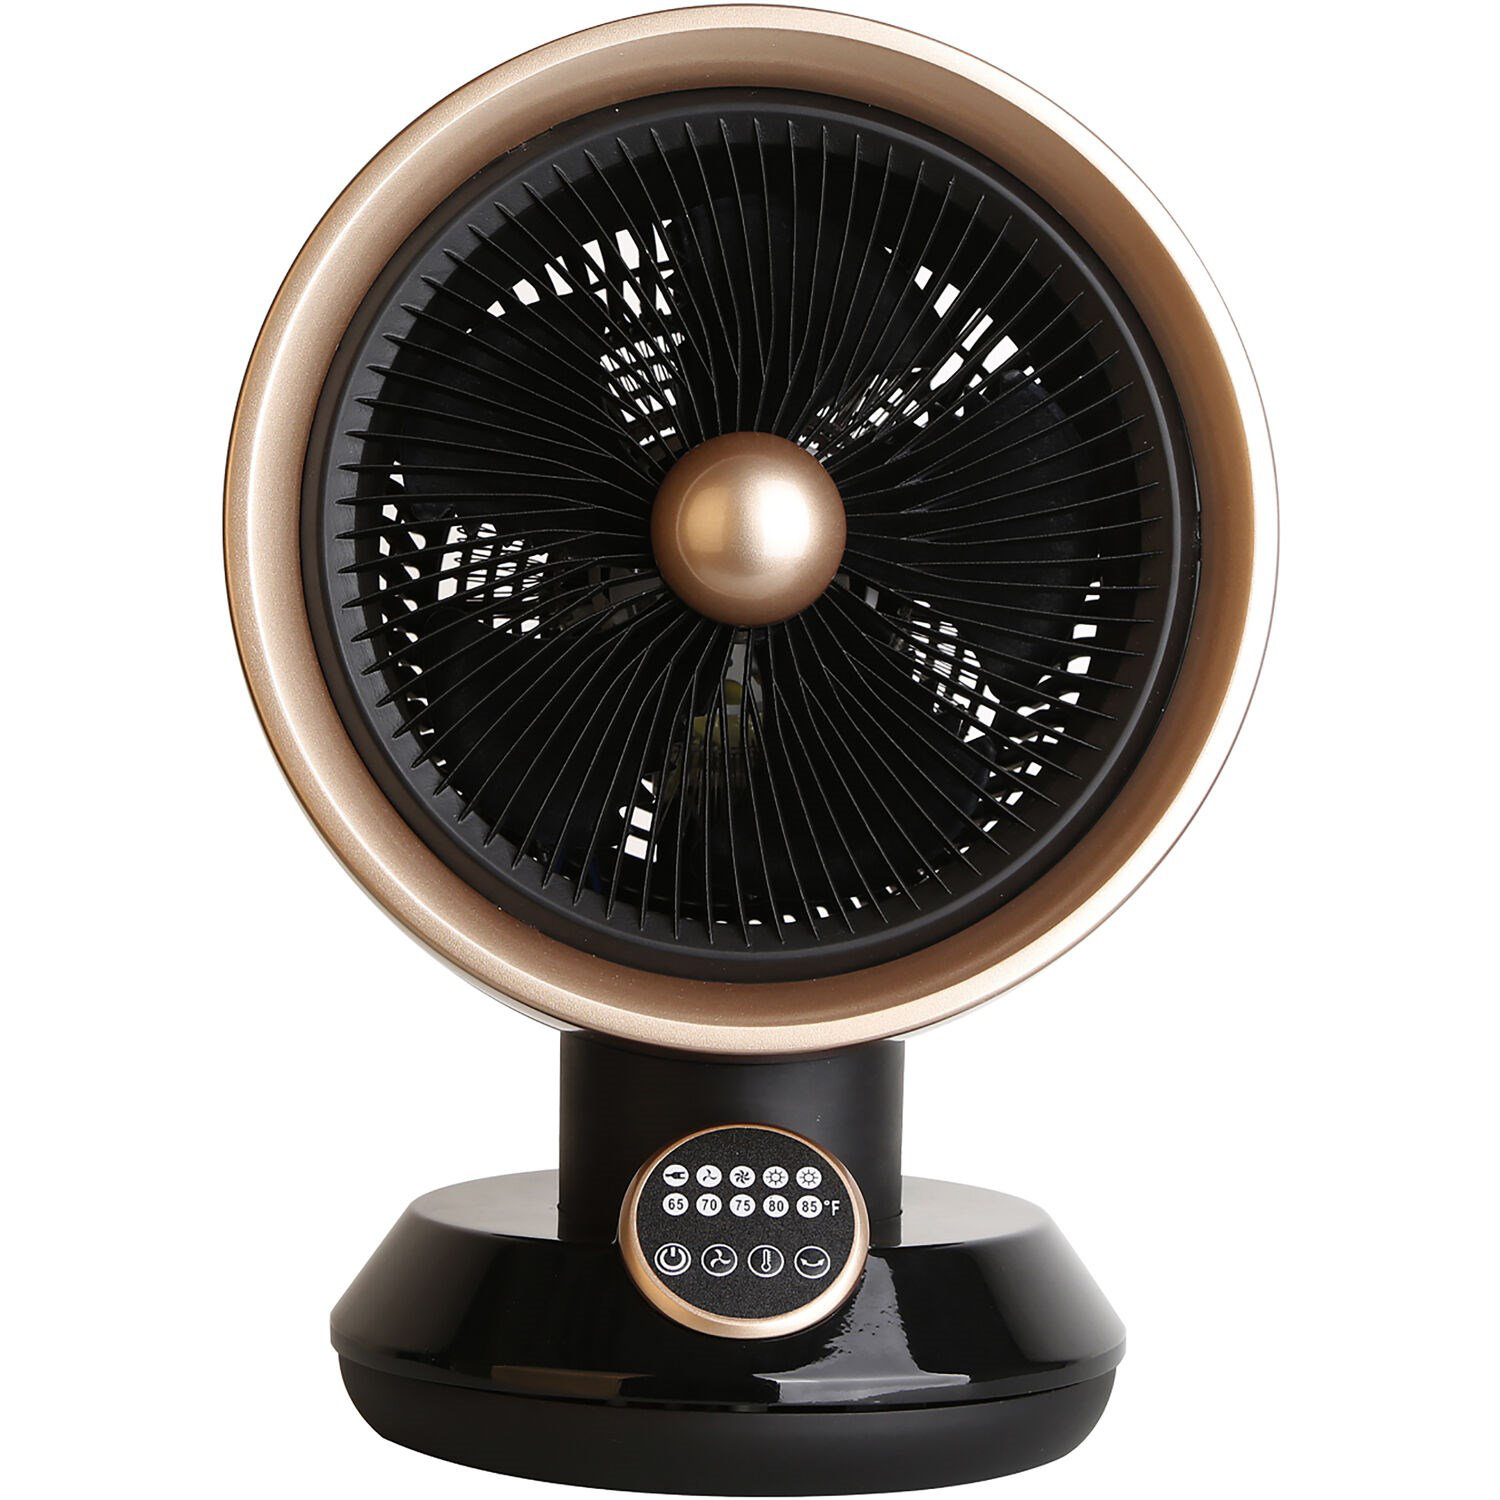 LifeSmart 2 in 1 Digital Control Fan Heater with Oscillation, 1500W